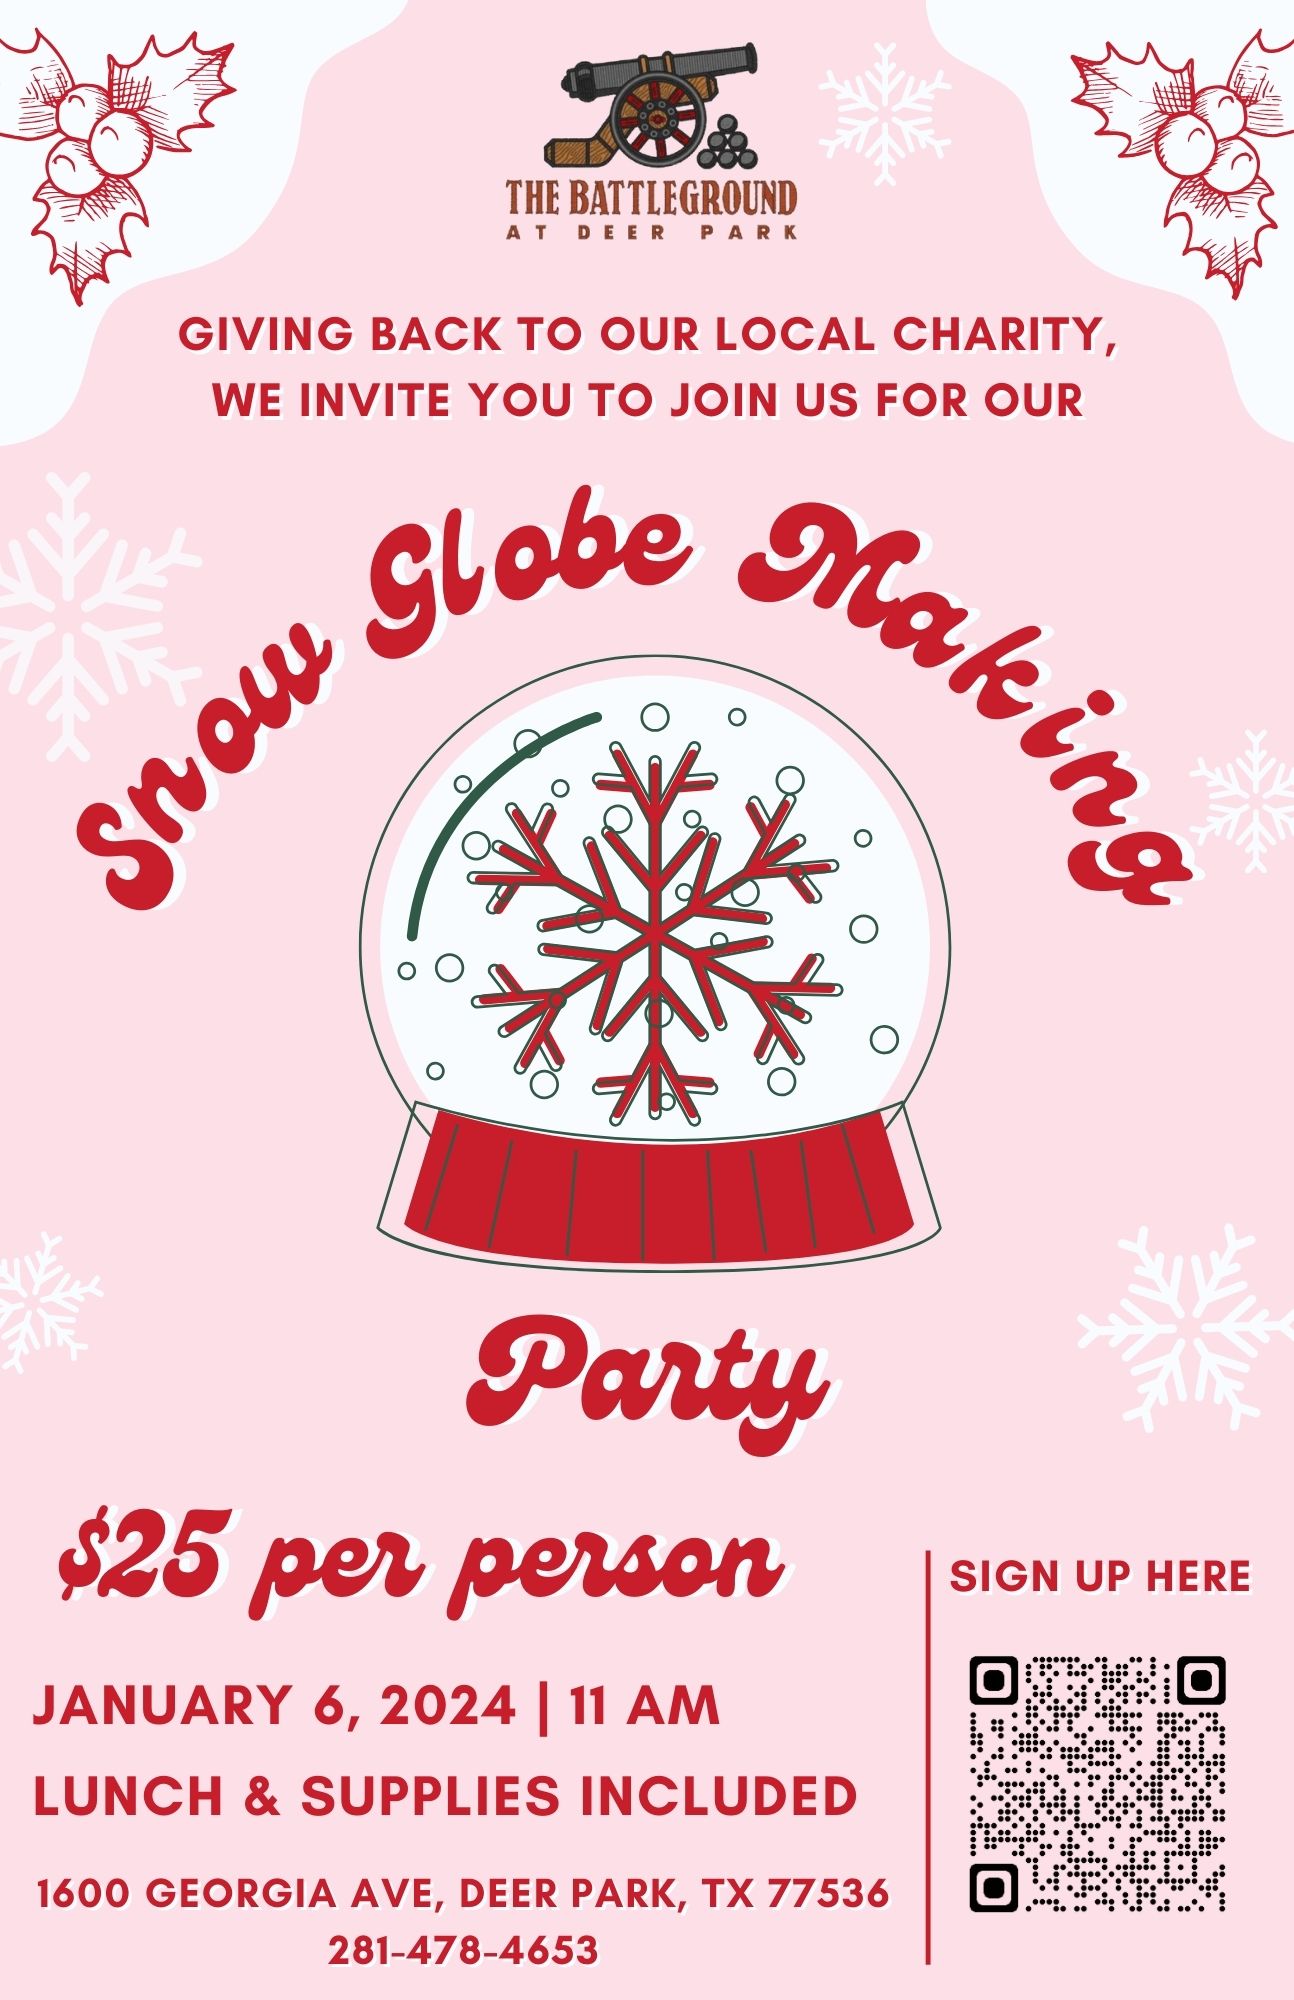 BGGC snow globe making